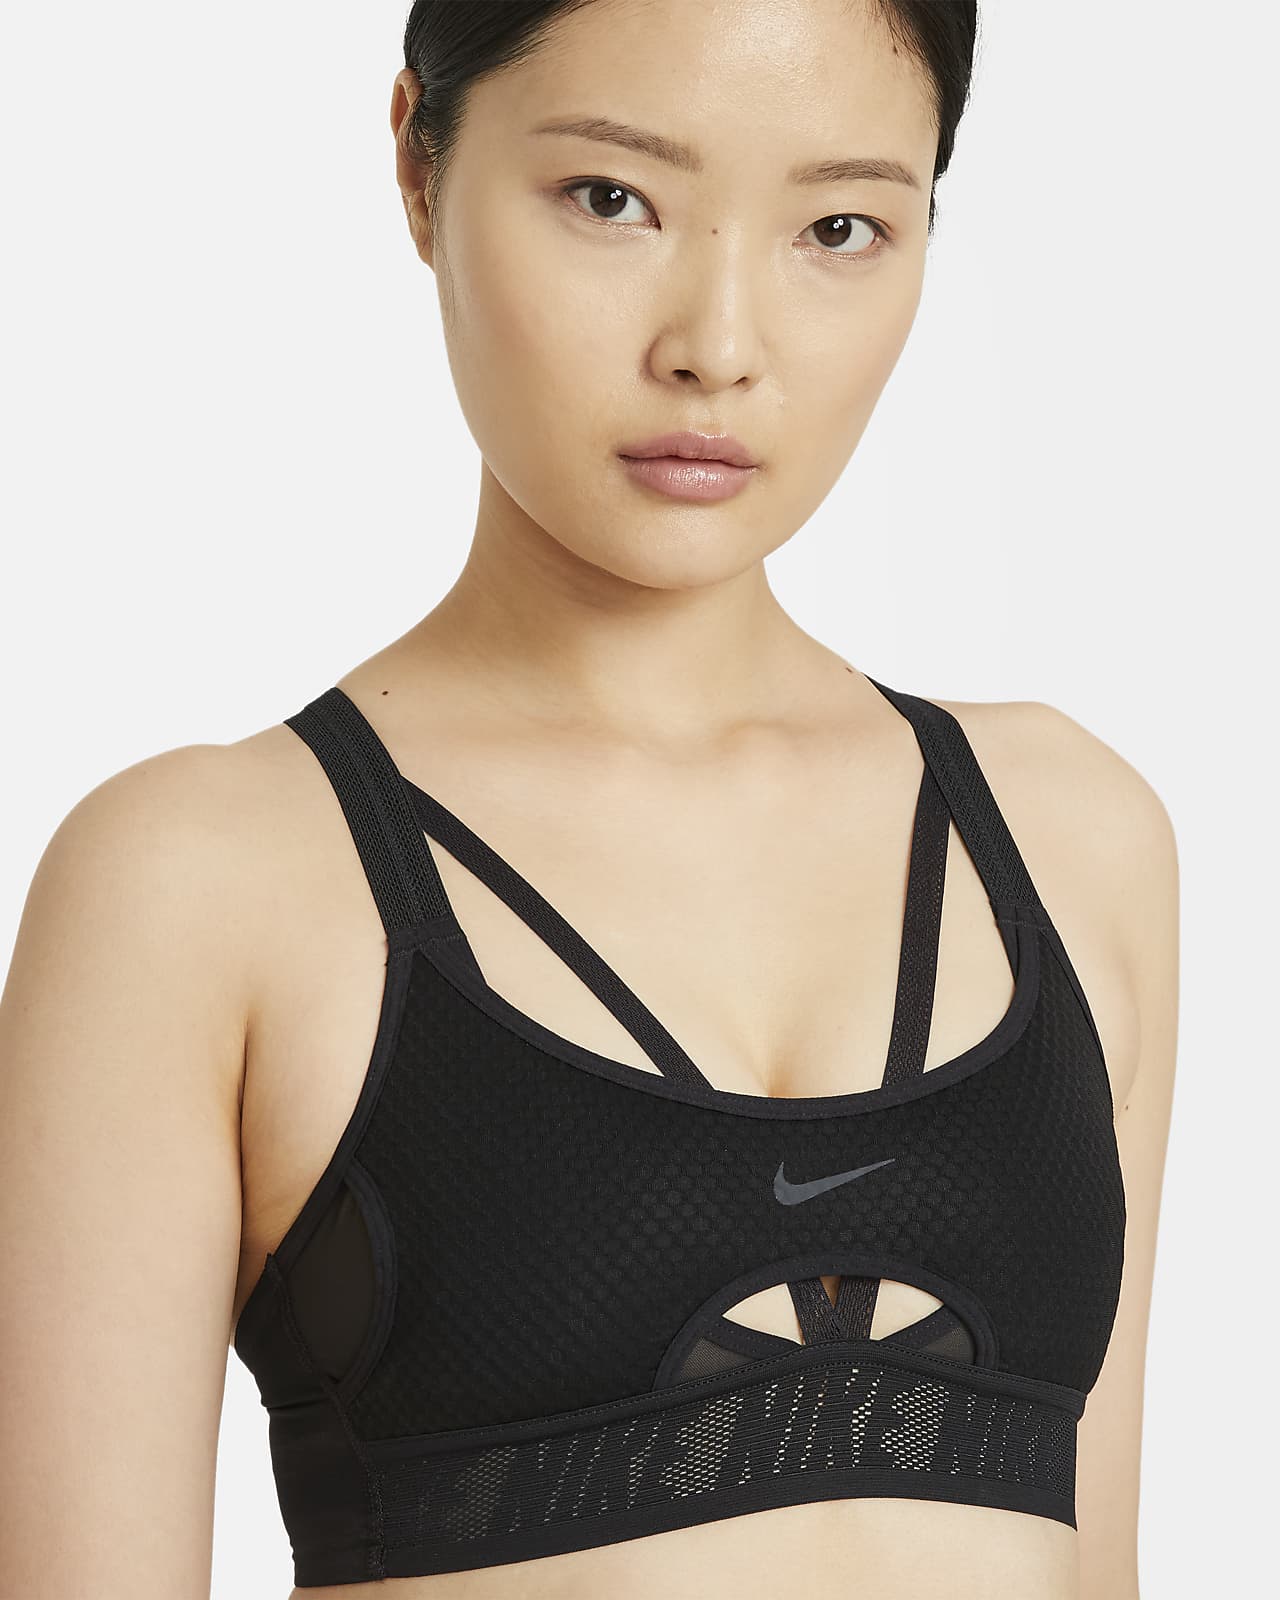 nike women's air mesh low sports bra